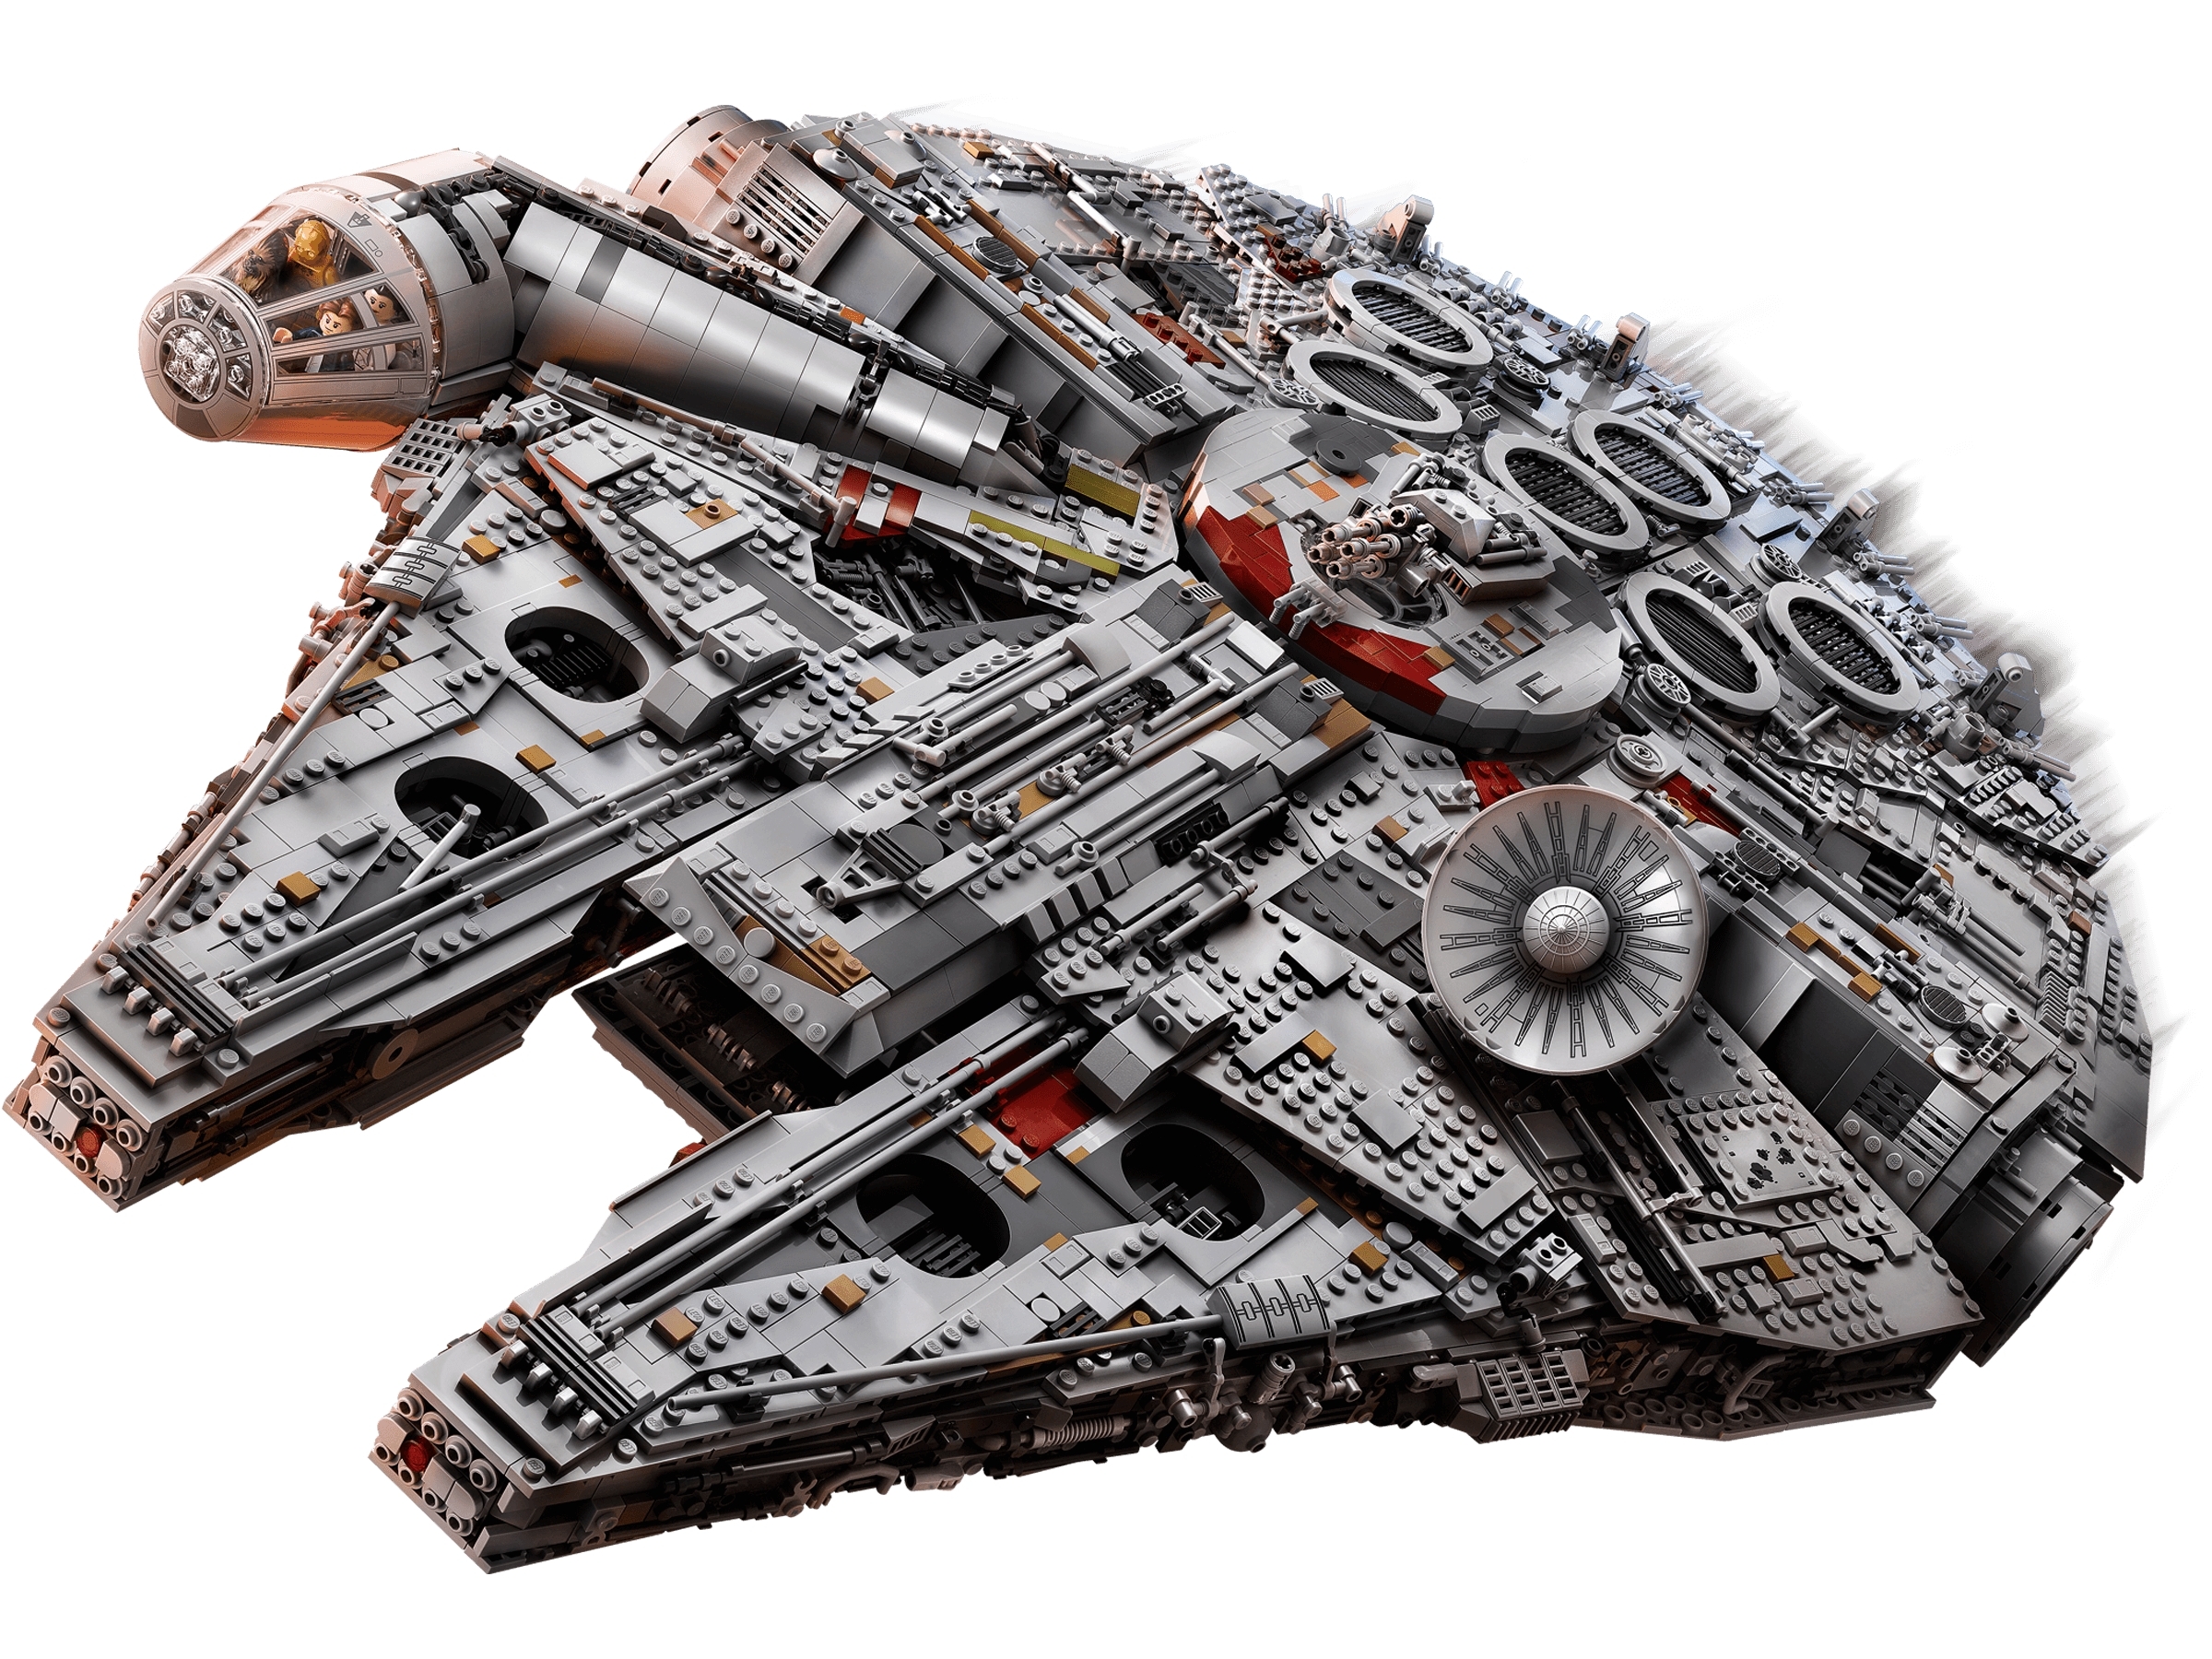 LEGO Star Wars  Han Solo minifigure from UCS Millennium Falcon set 75192 